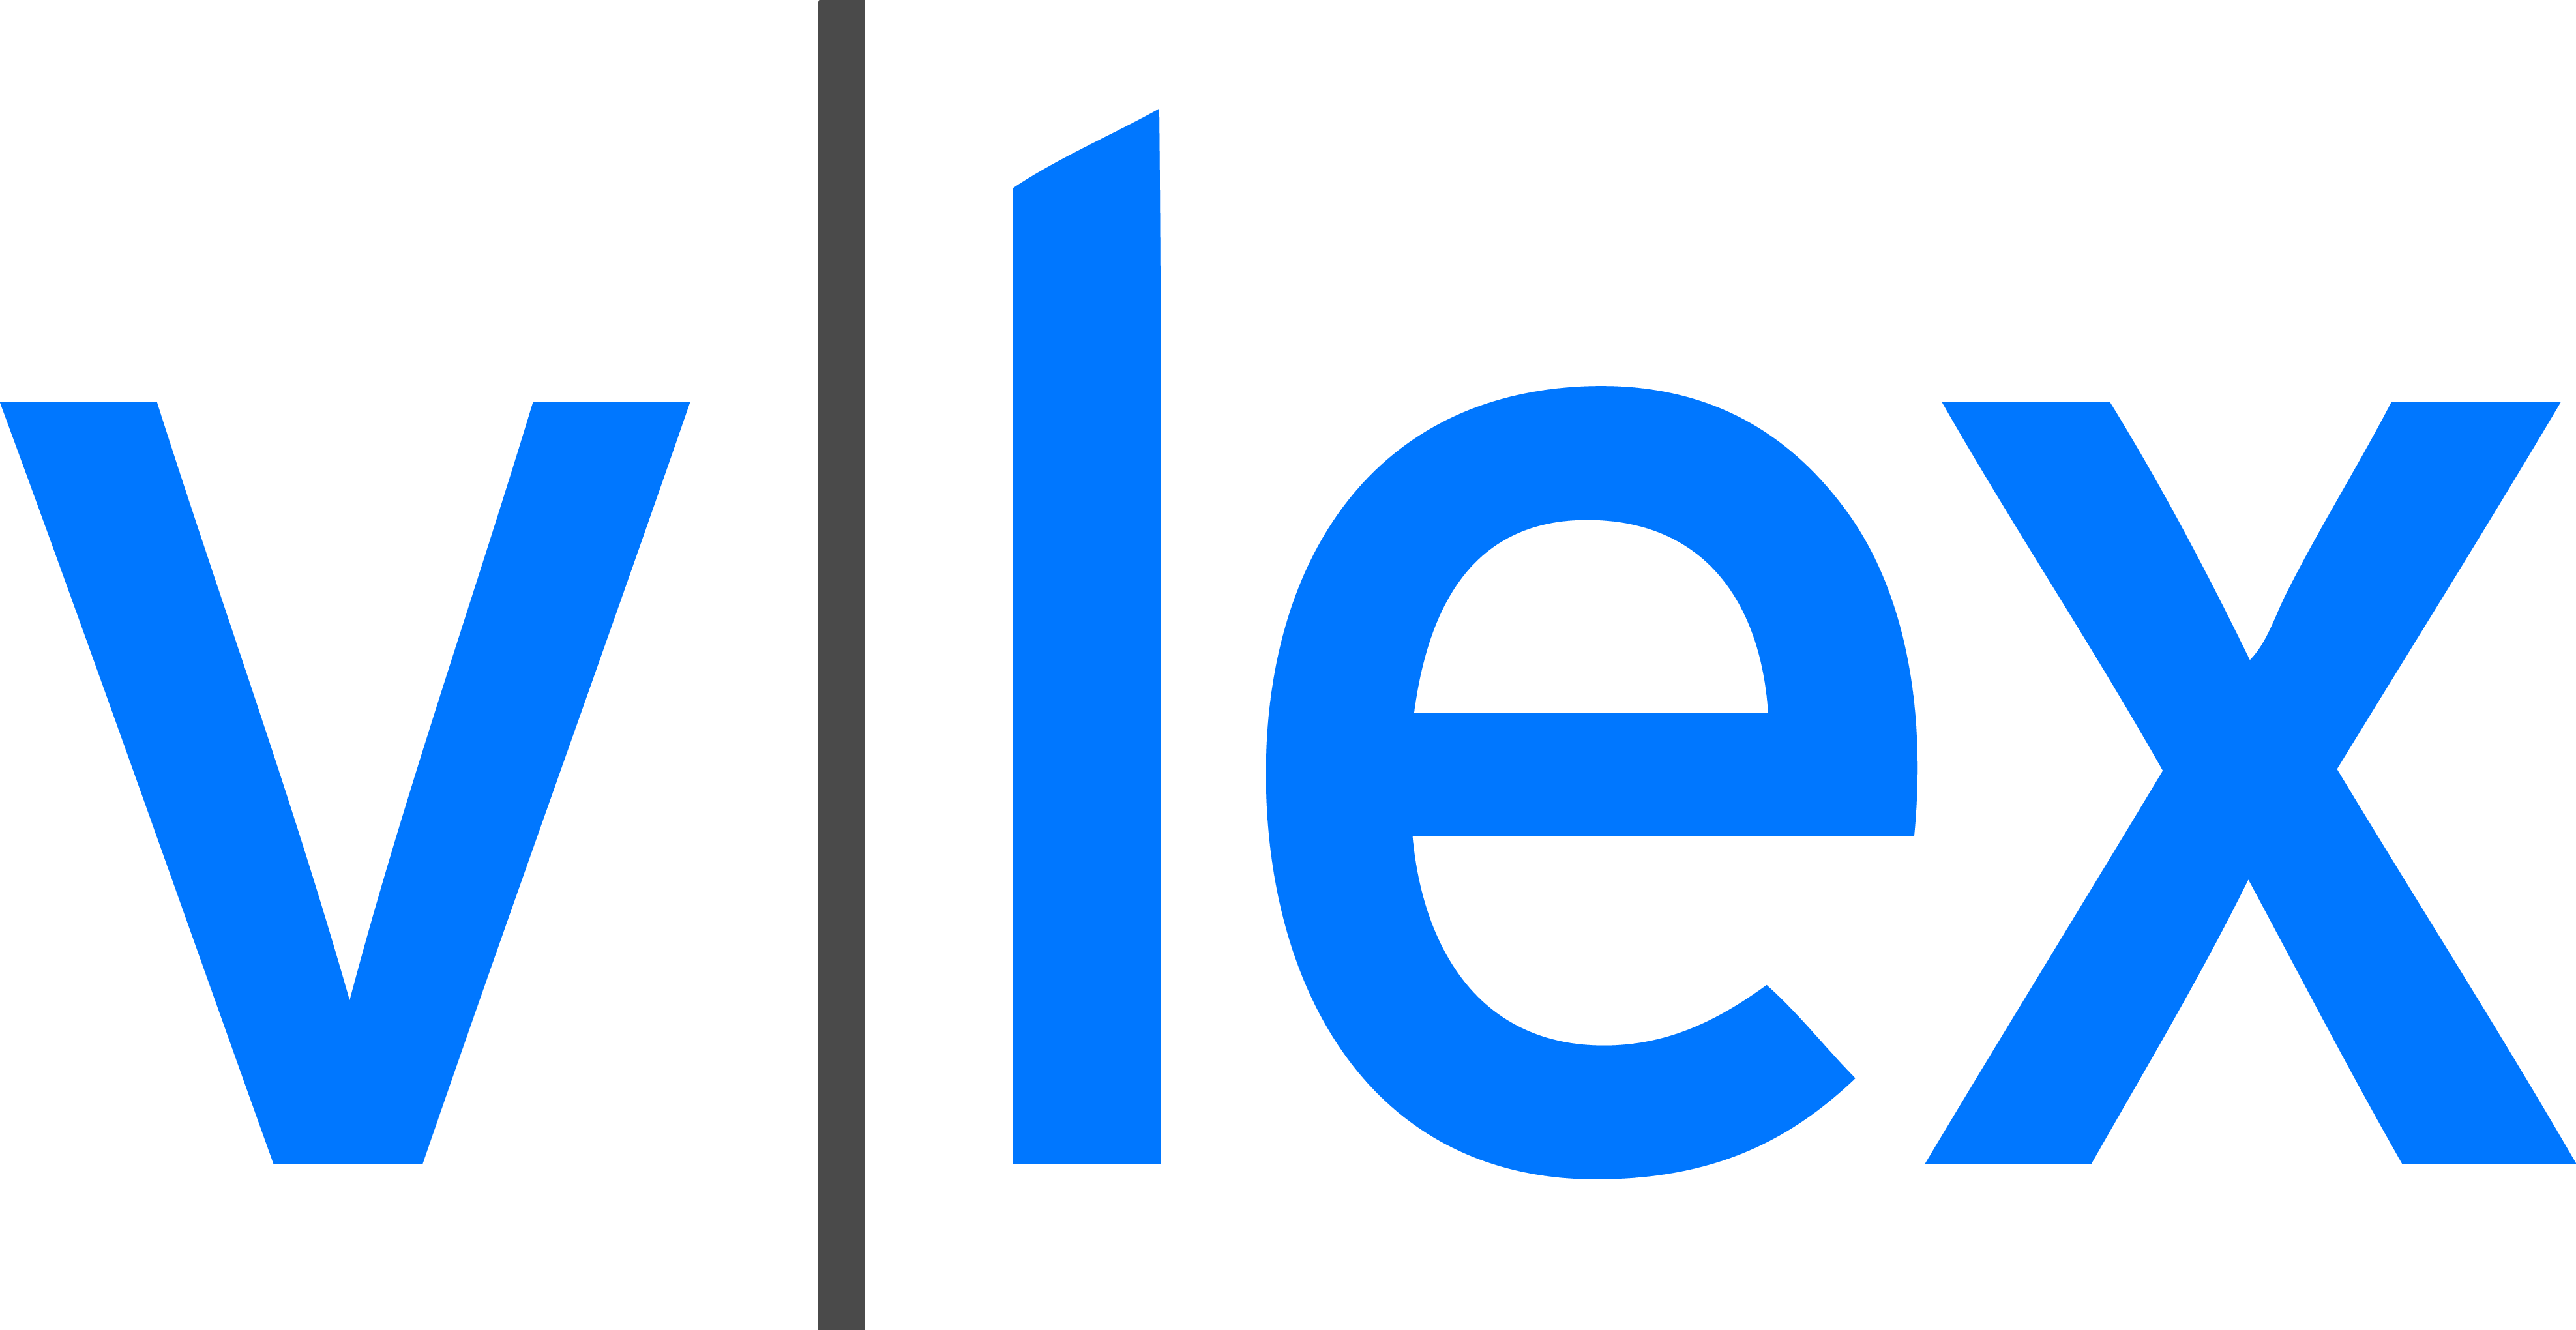 vLex logo